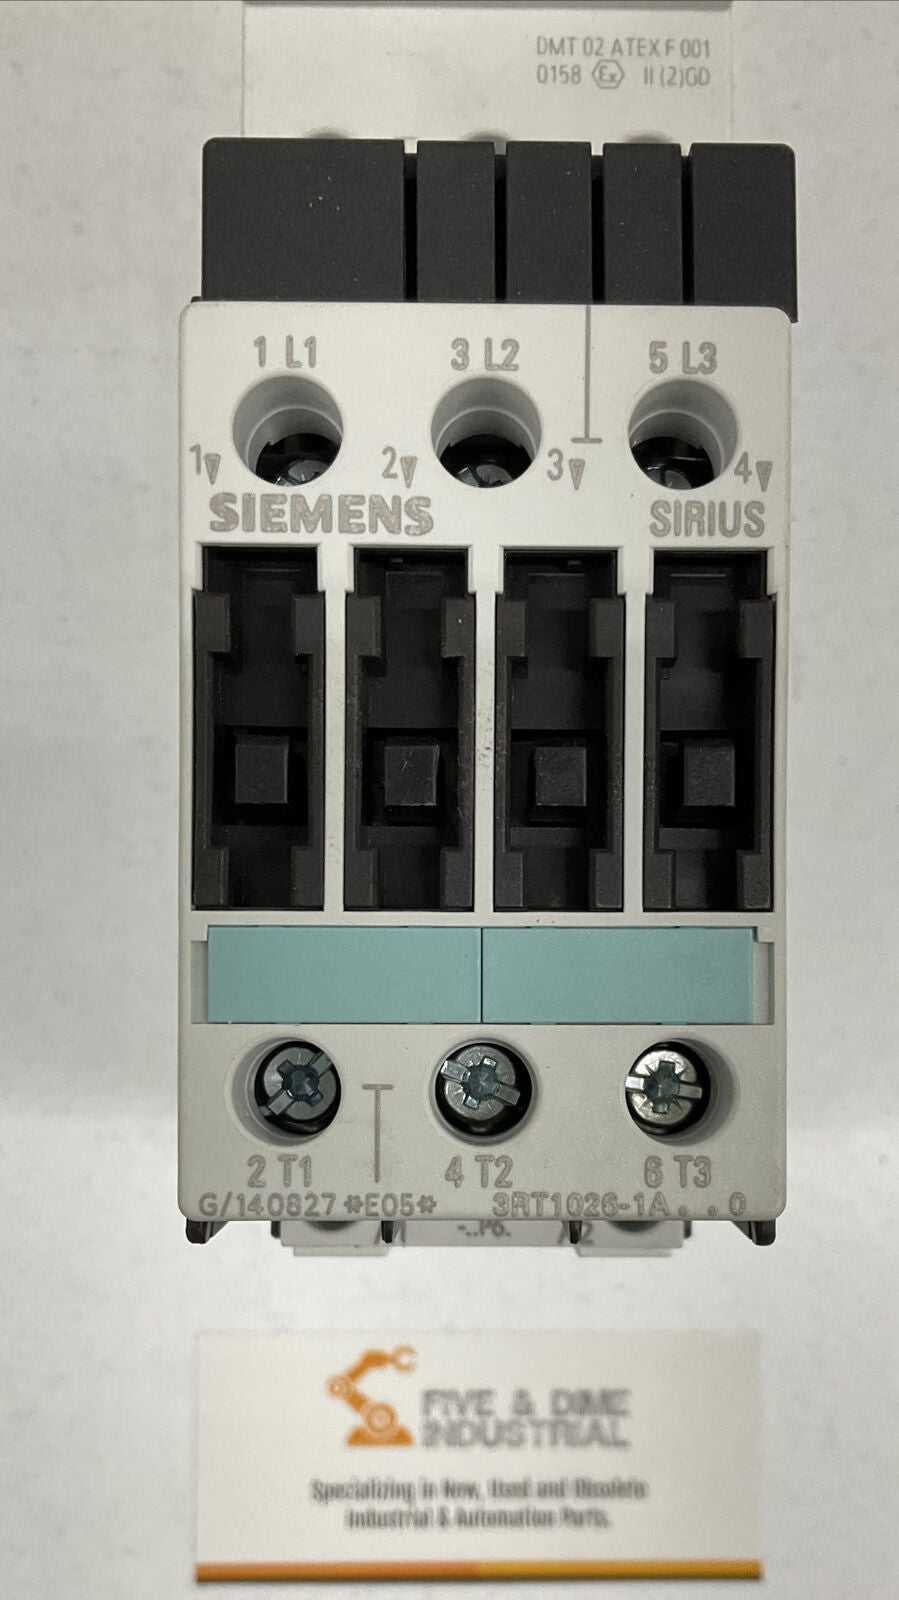 Siemens 3RA11254BD261AP6 Combination Motor Starter 3RV1021-4BA10 14-20A (OV109)